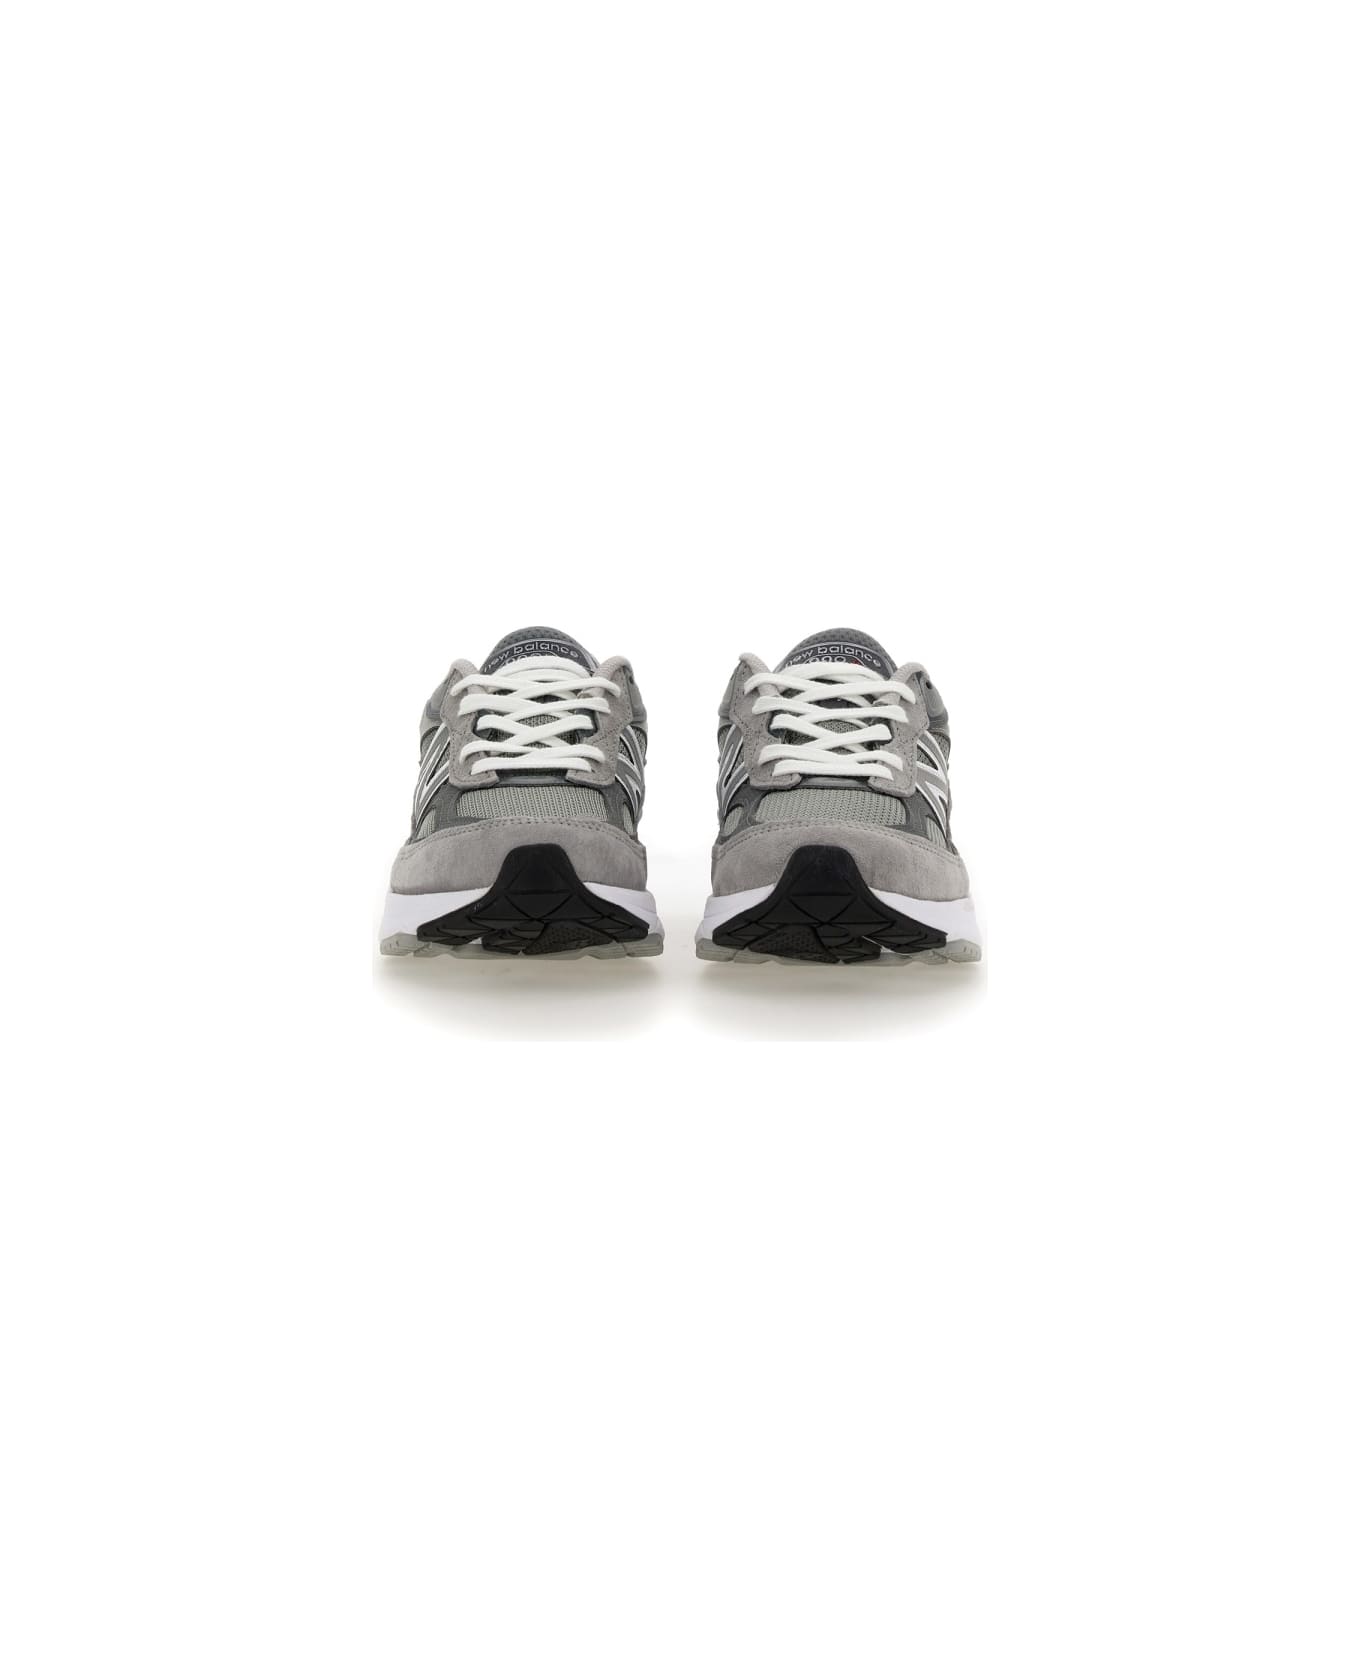 New Balance Sneaker "made In Usa 990v6" - GREY